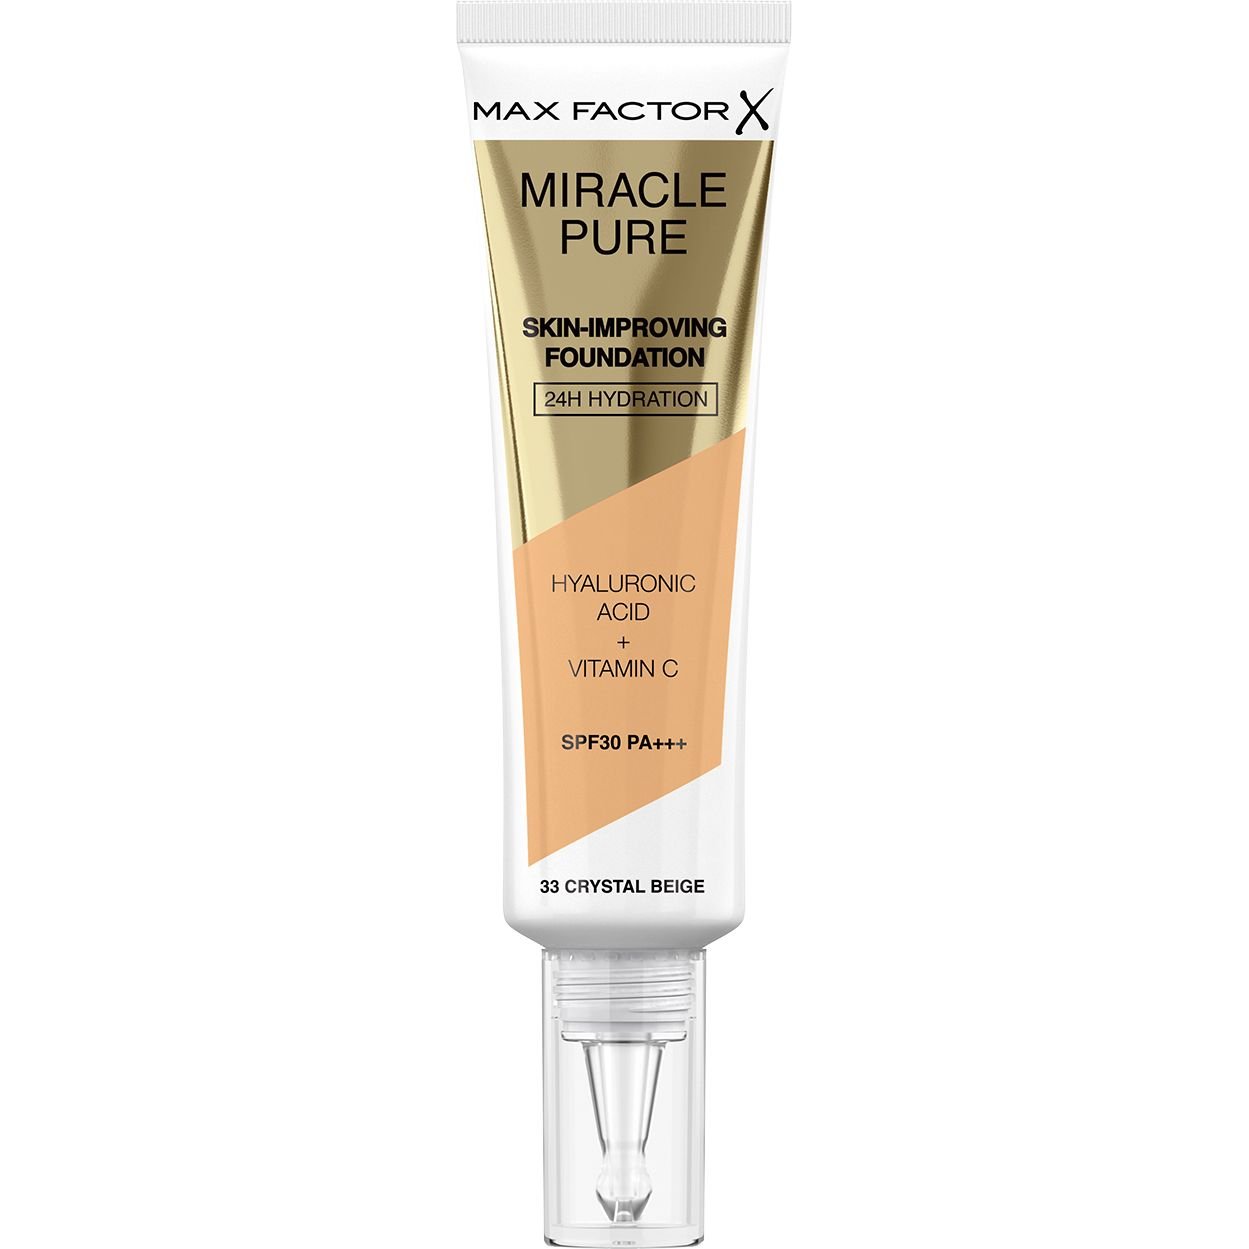 Тональная основа Max Factor Miracle Pure Skin-Improving Foundation SPF30 тон 033 (Crystal Beige) 30 мл - фото 1